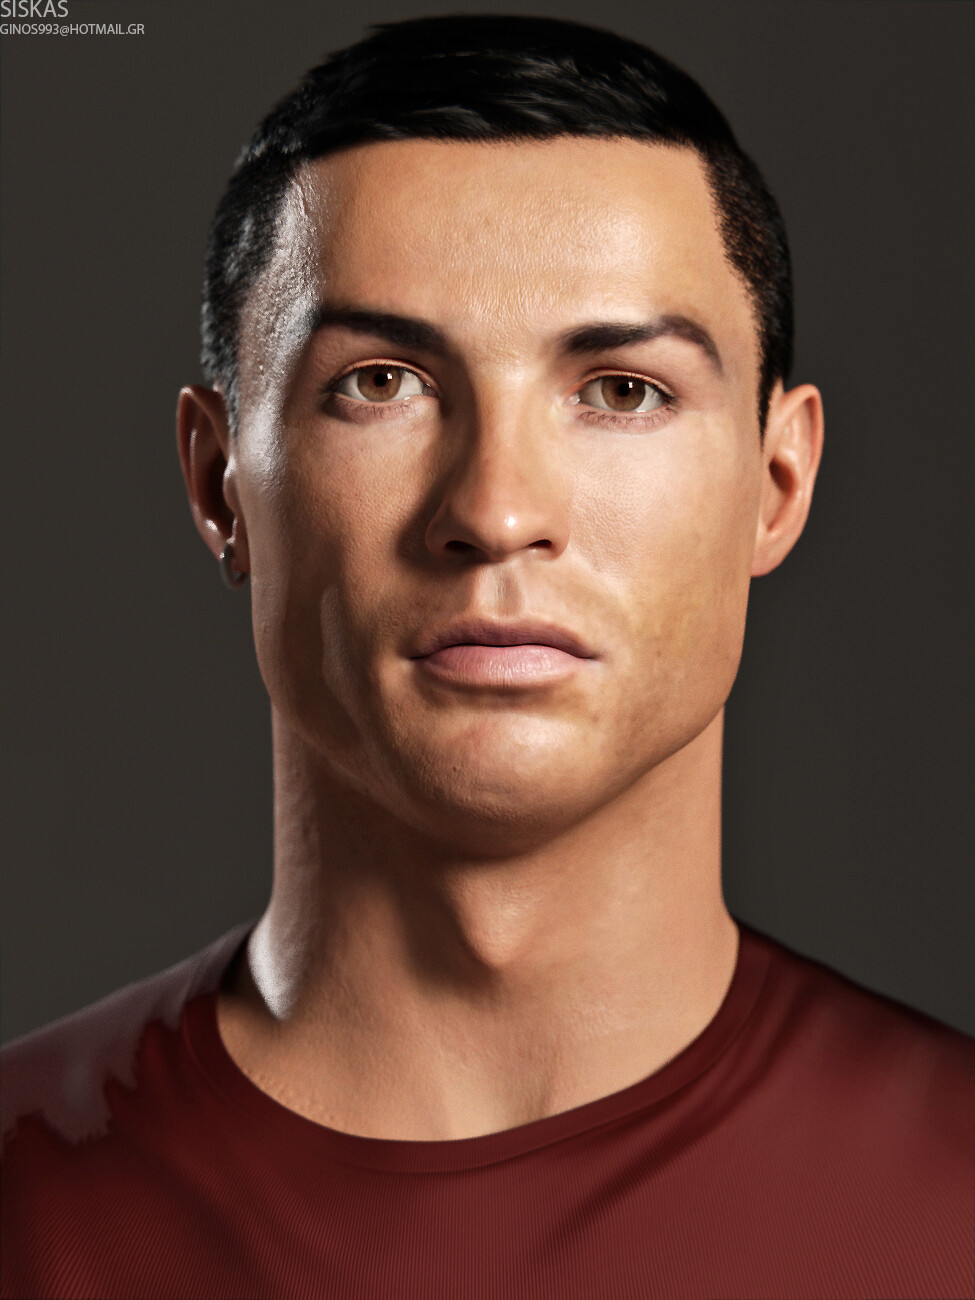 Cristiano Ronaldo - Finished Projects - Blender Artists Community